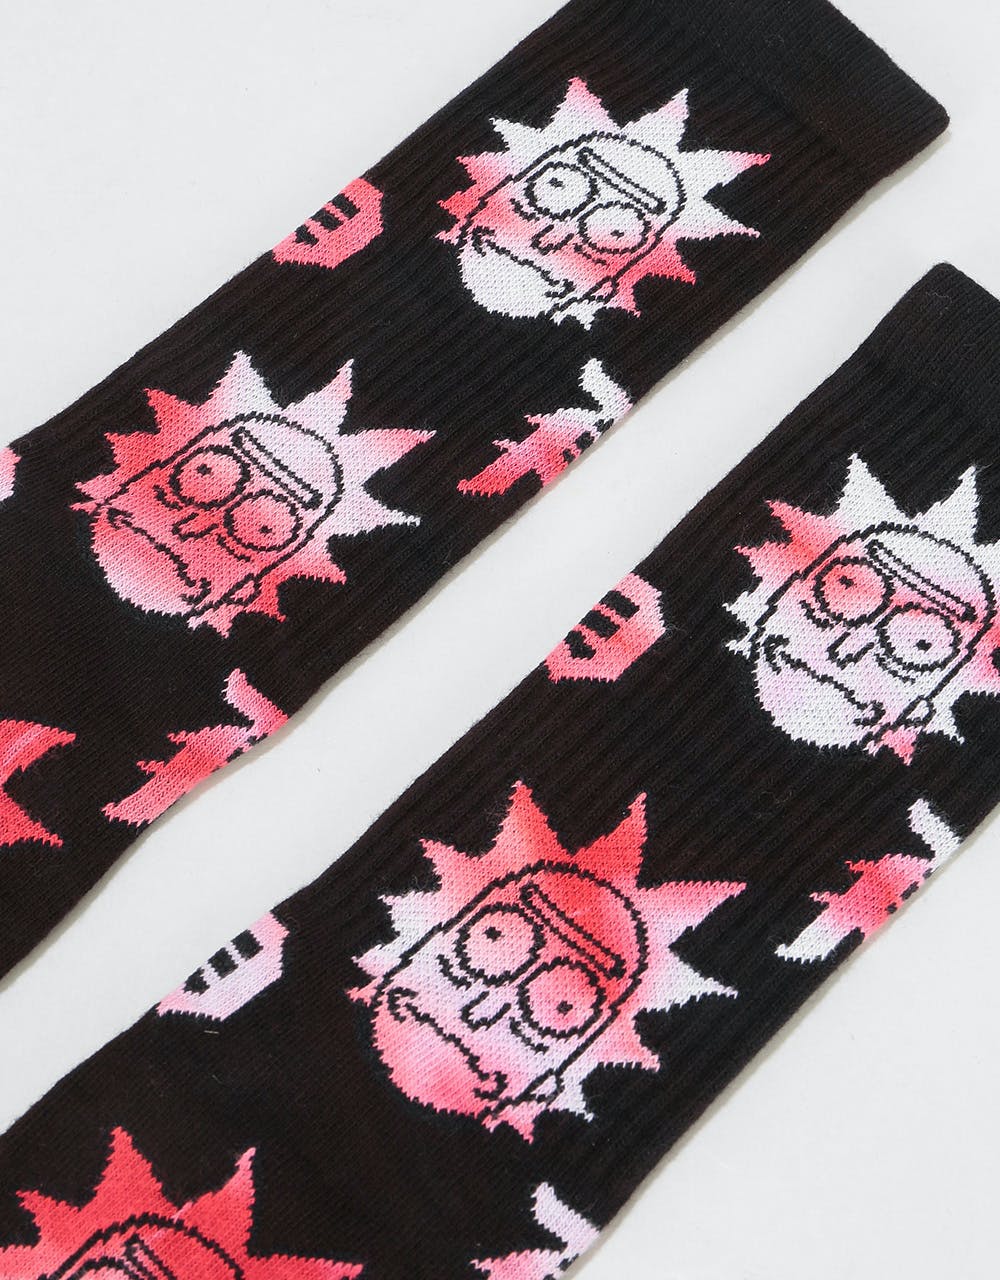 Primitive x Rick & Morty RnM Crew Socks - Pink Tie Dye